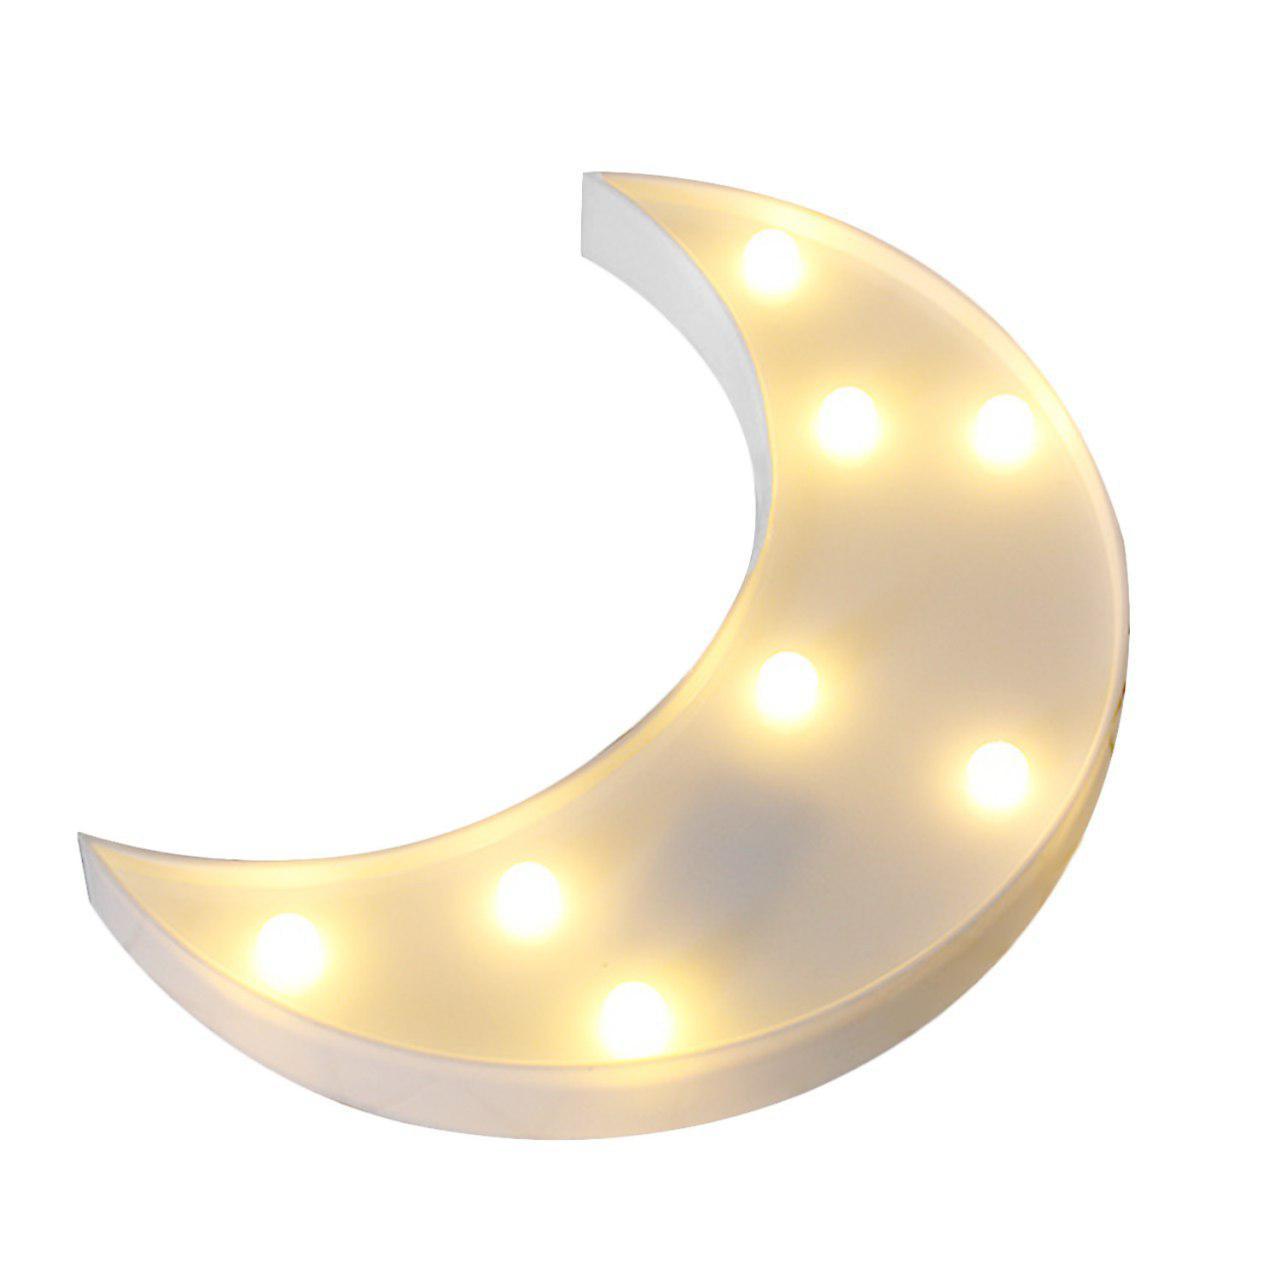 Декоративный LED светильник ночник Месяц CG Funny Lamp Moon